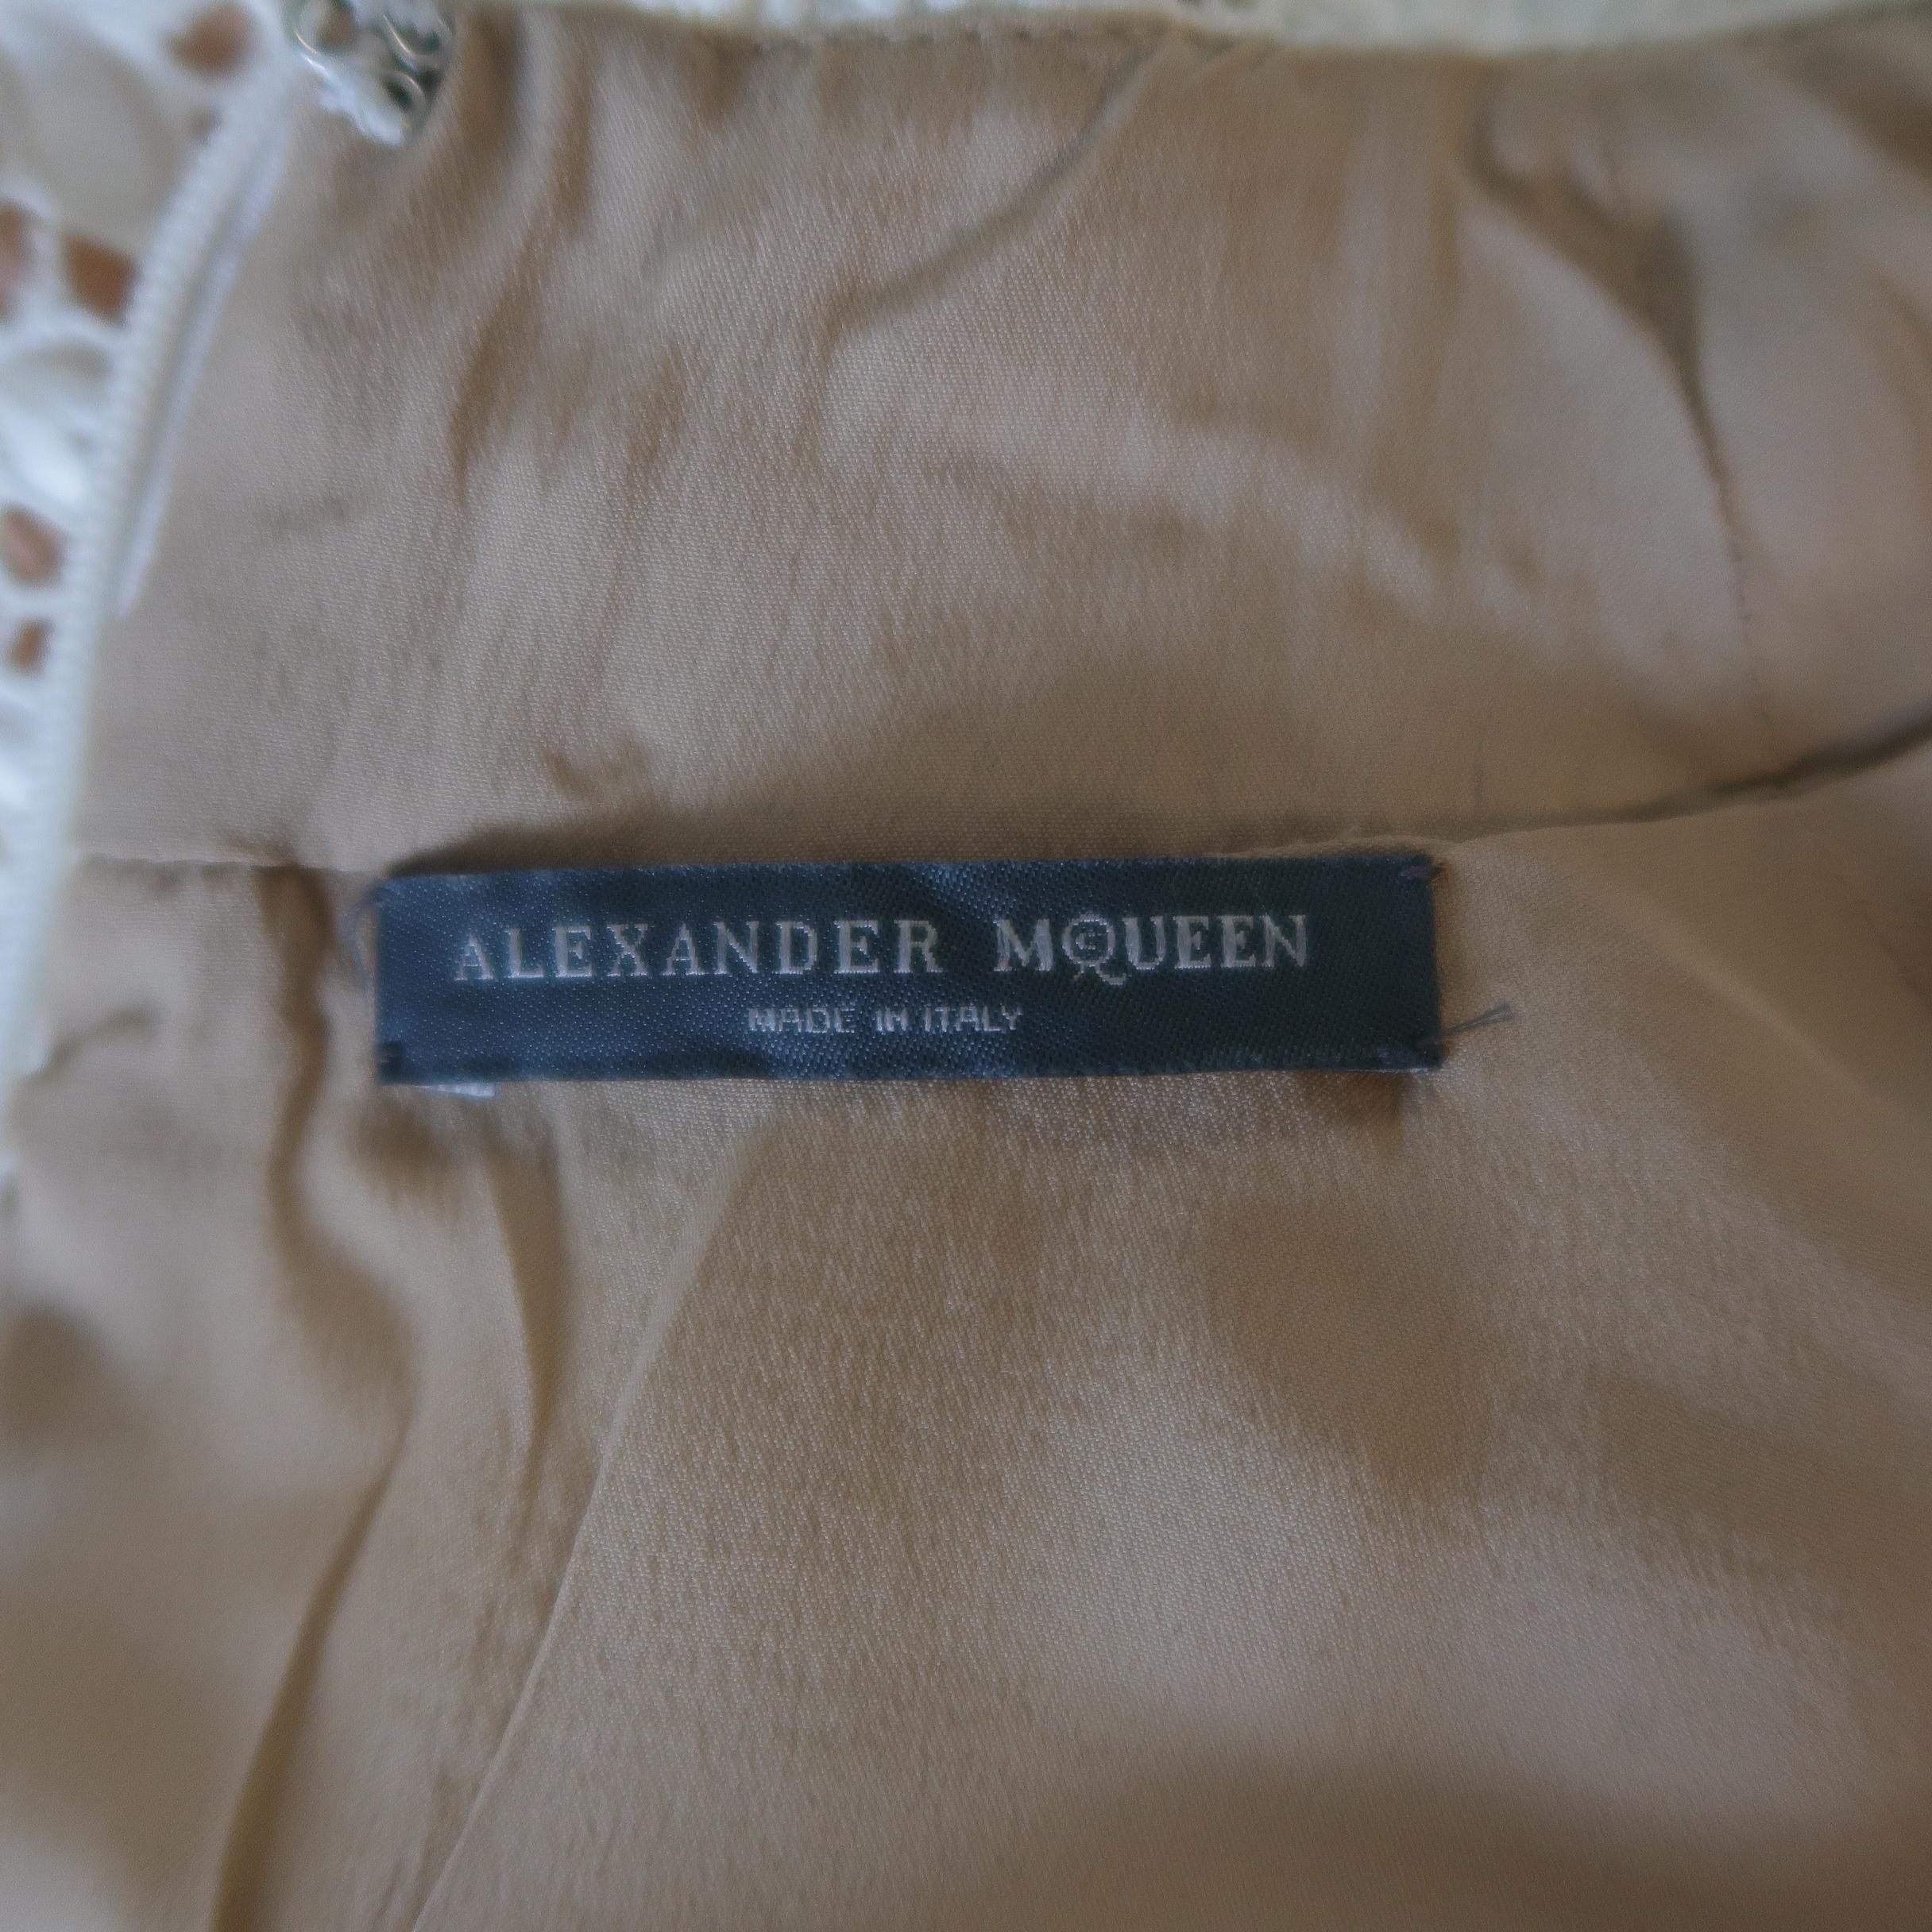 Alexander McQueen White Cream Lace Cocktail Dress, Pre-Fall 2015 Runway 5